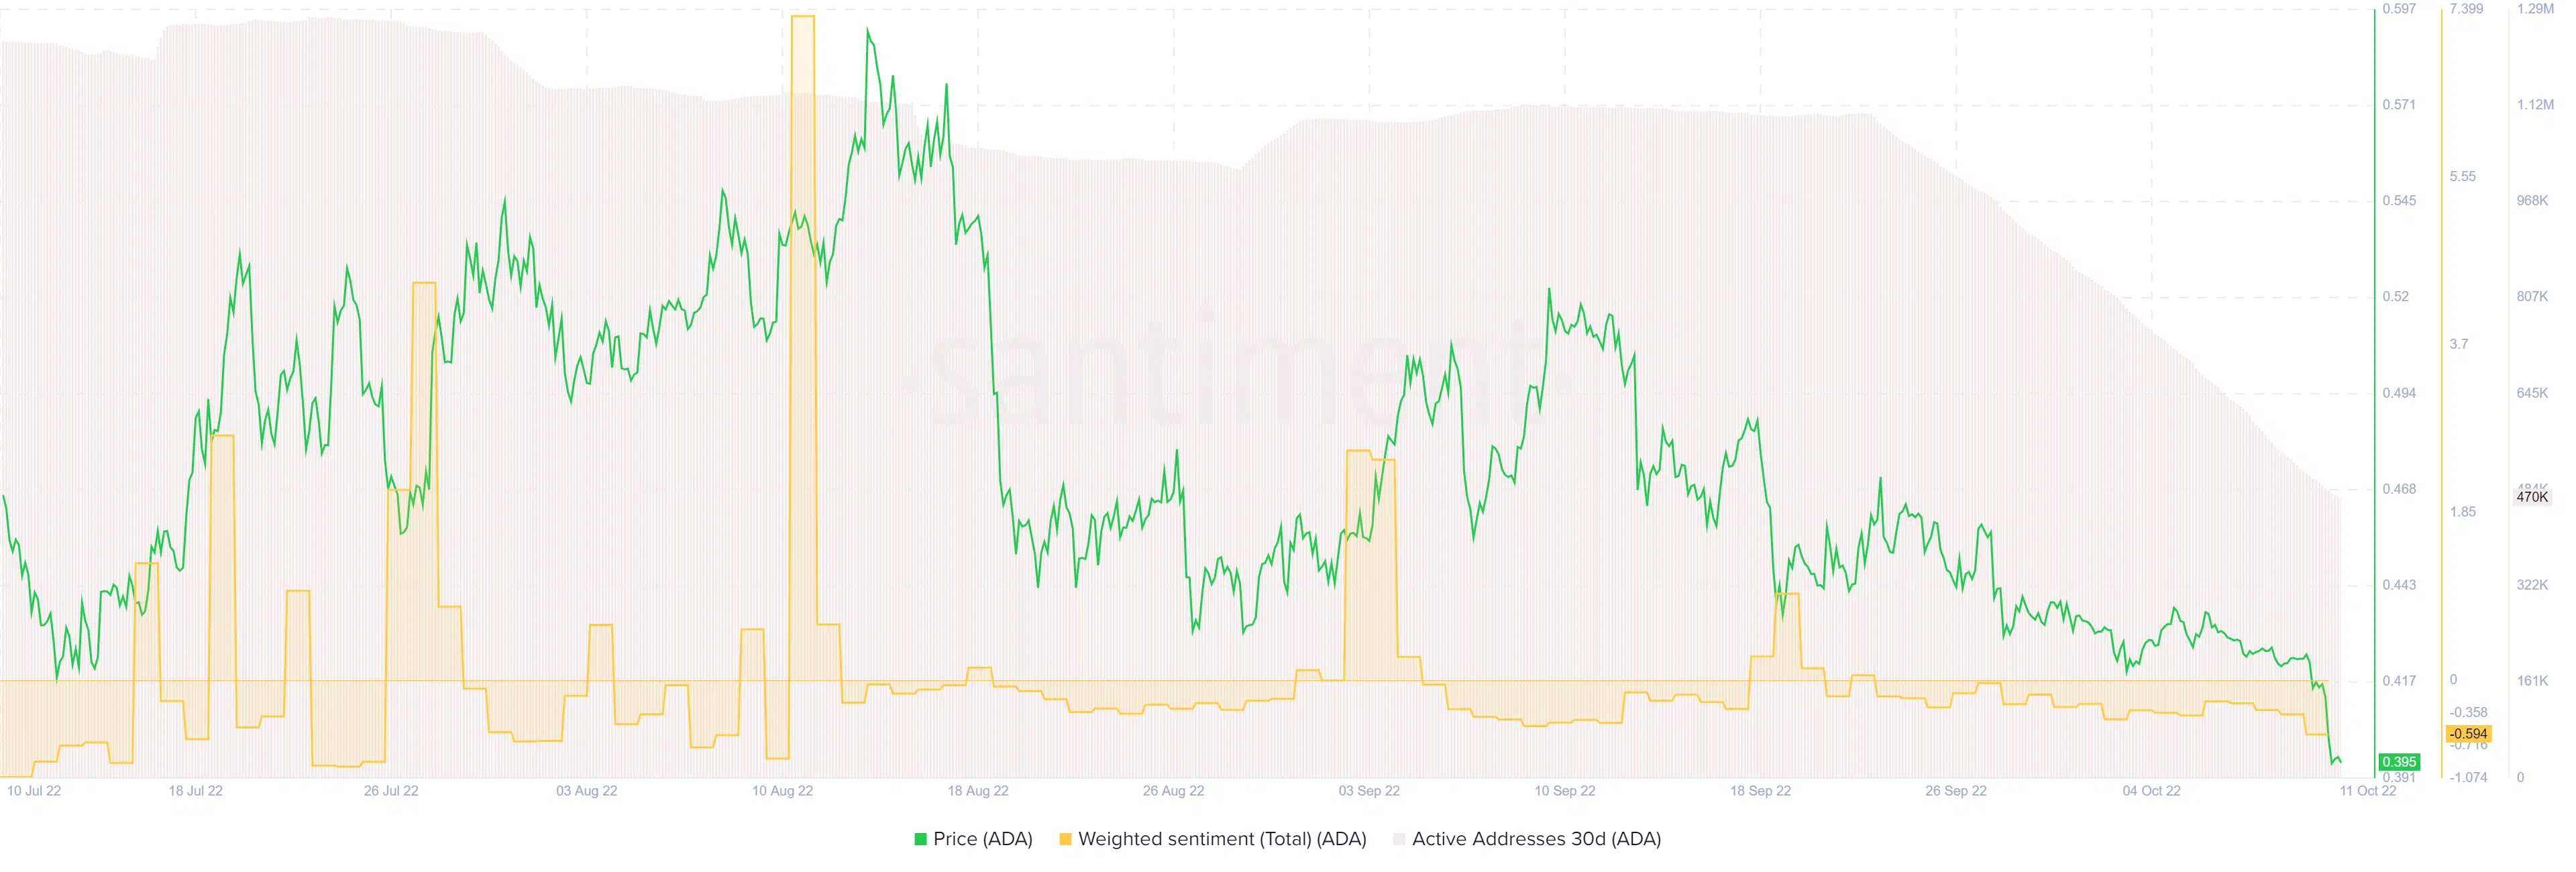 Cardano crashes below $0.4, should you look to short ADA?